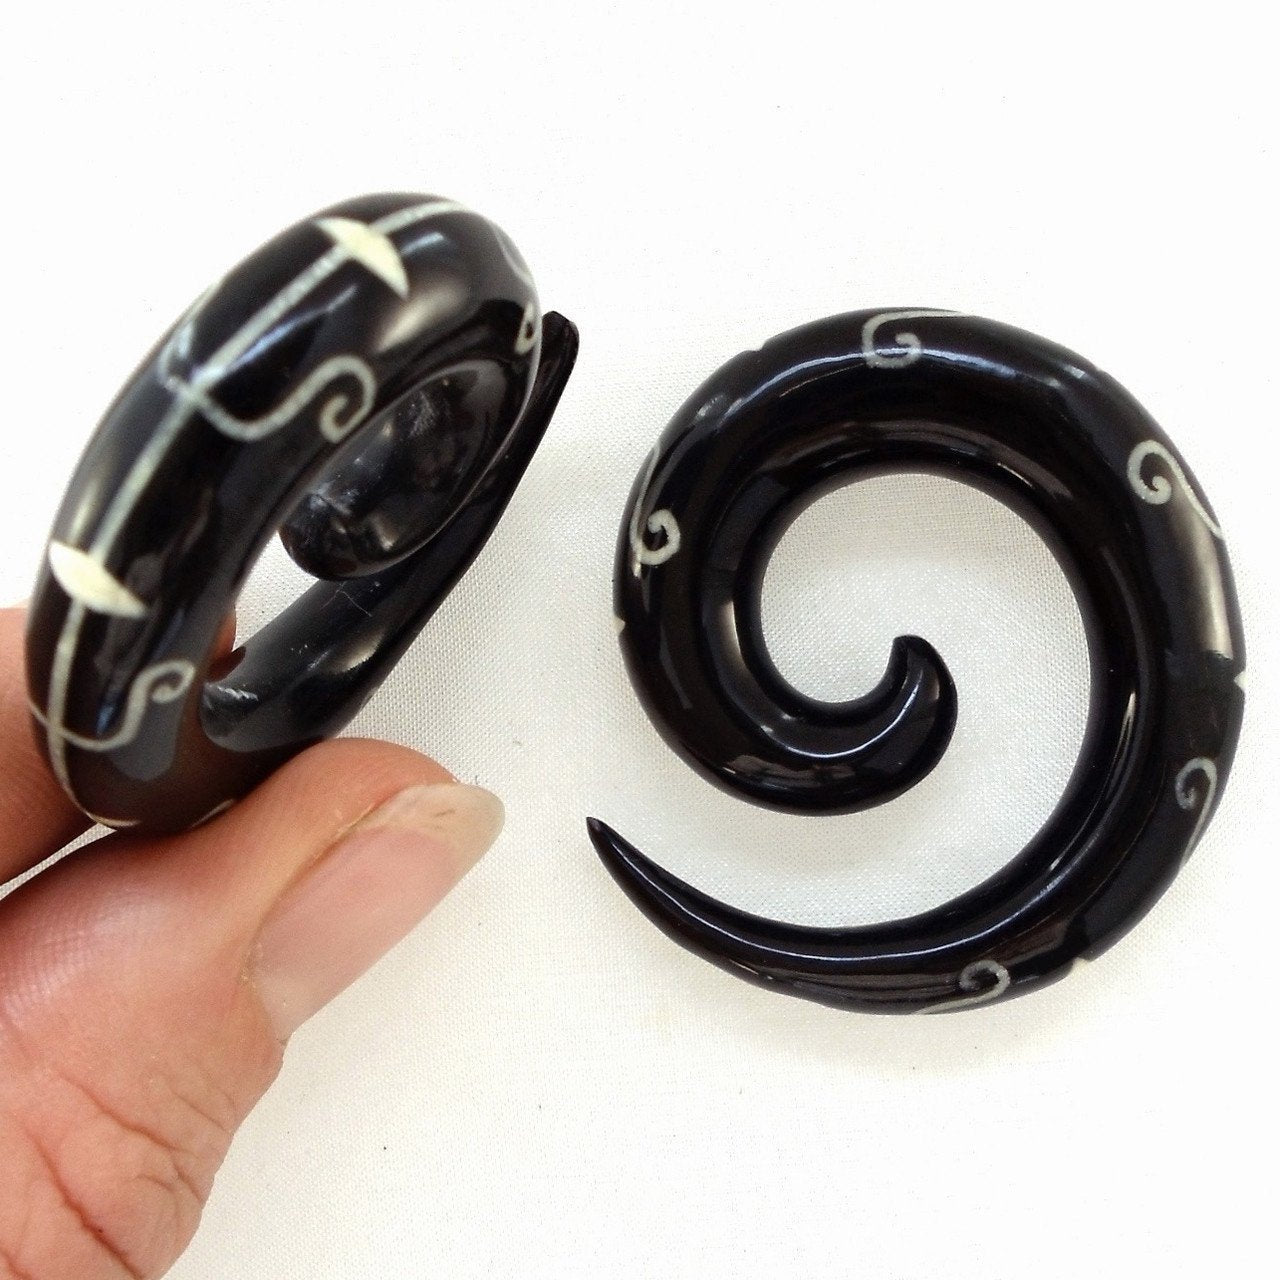 Gauged Earrings :|: Water Buffalo Horn Spirals, 00 gauge, $38 | Spiral Body Jewelry